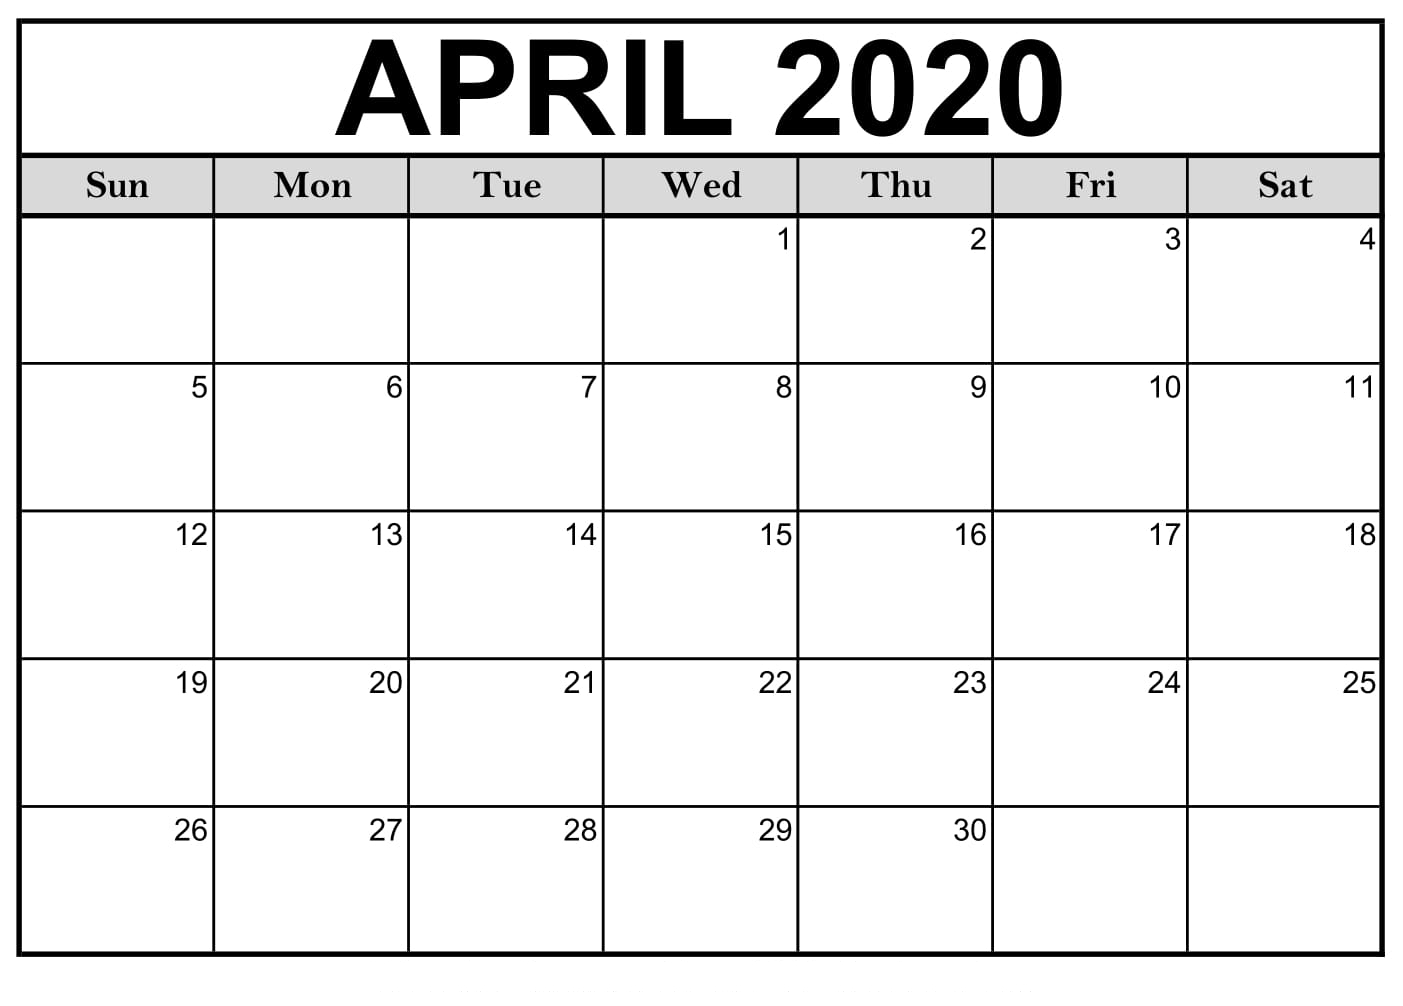 April 2020 Calendar Printable Monthly Calendar - Idea Hunt